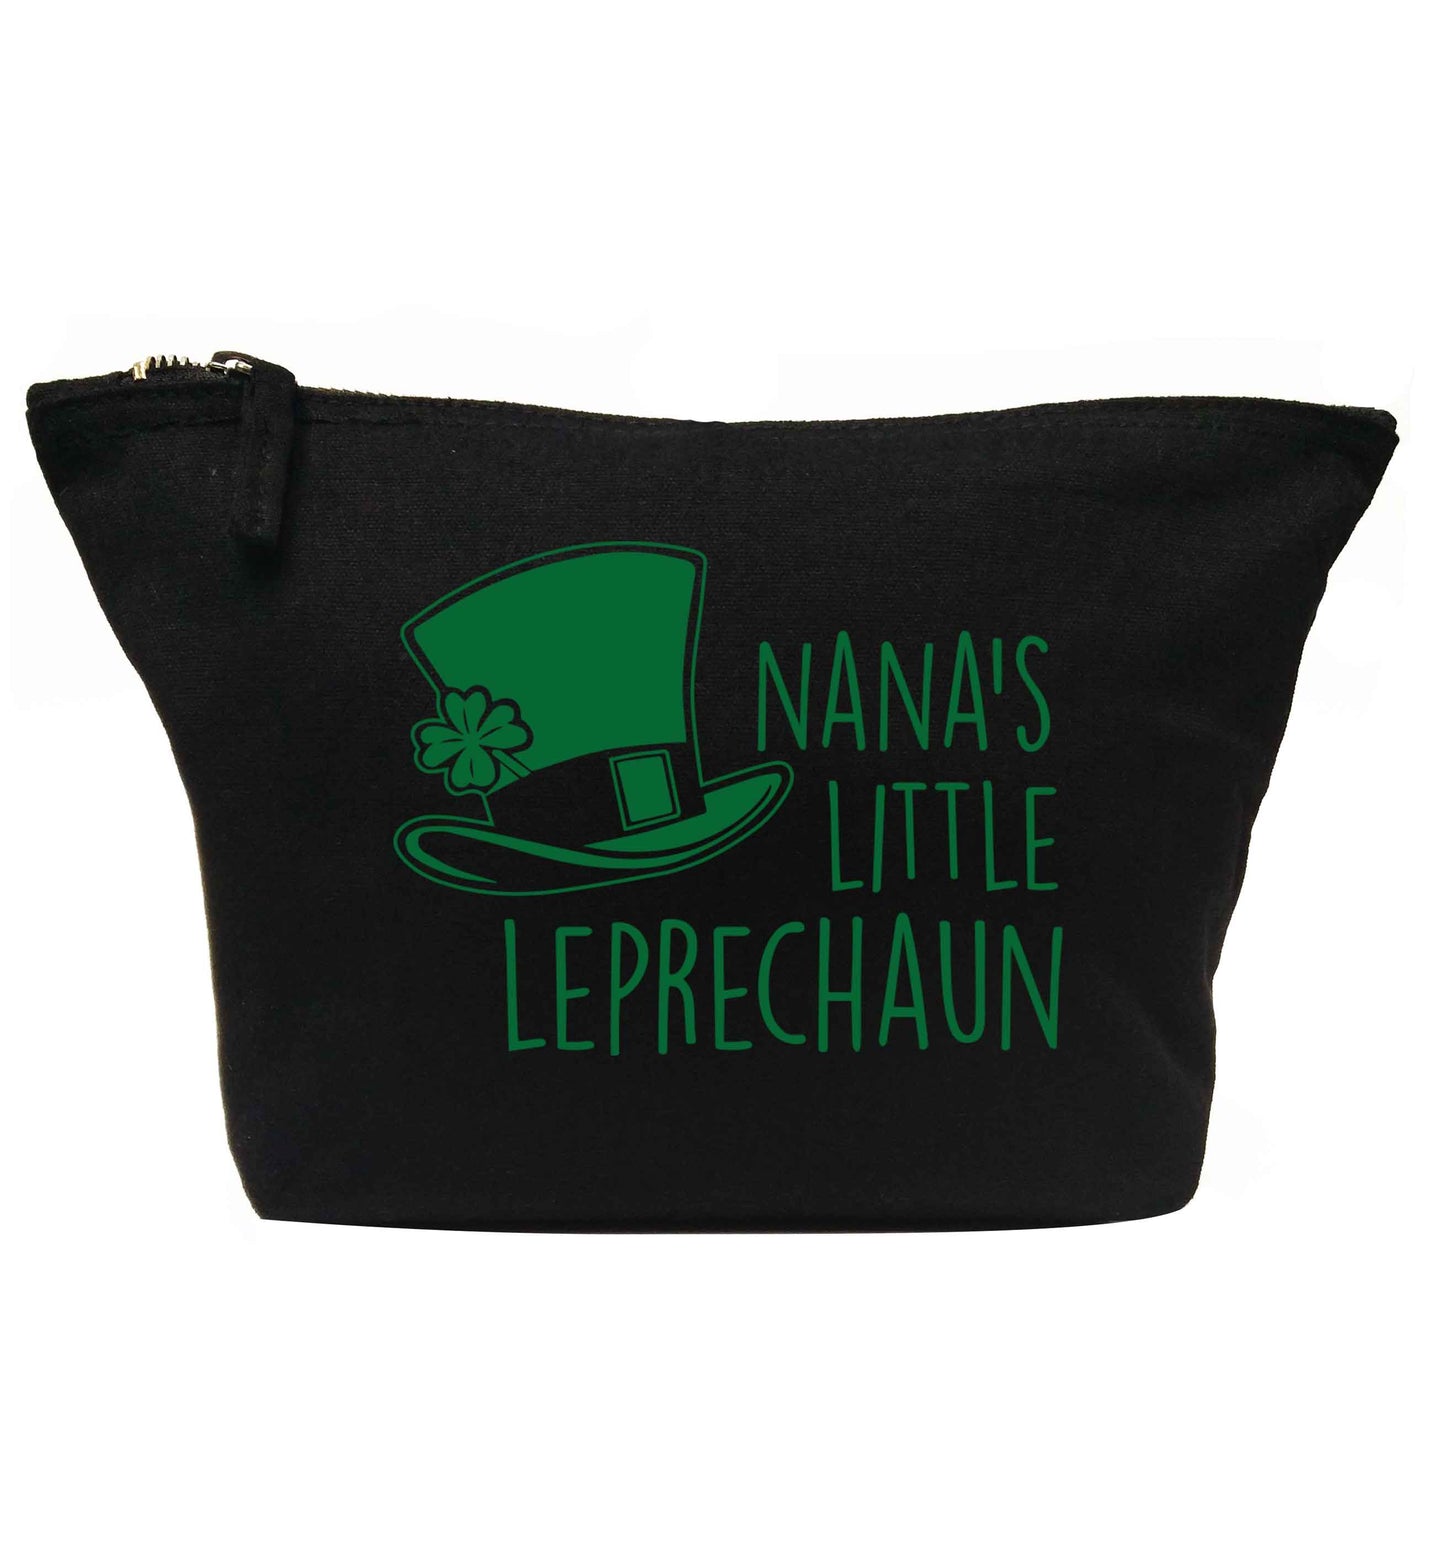 Nana's little leprechaun | Makeup / wash bag